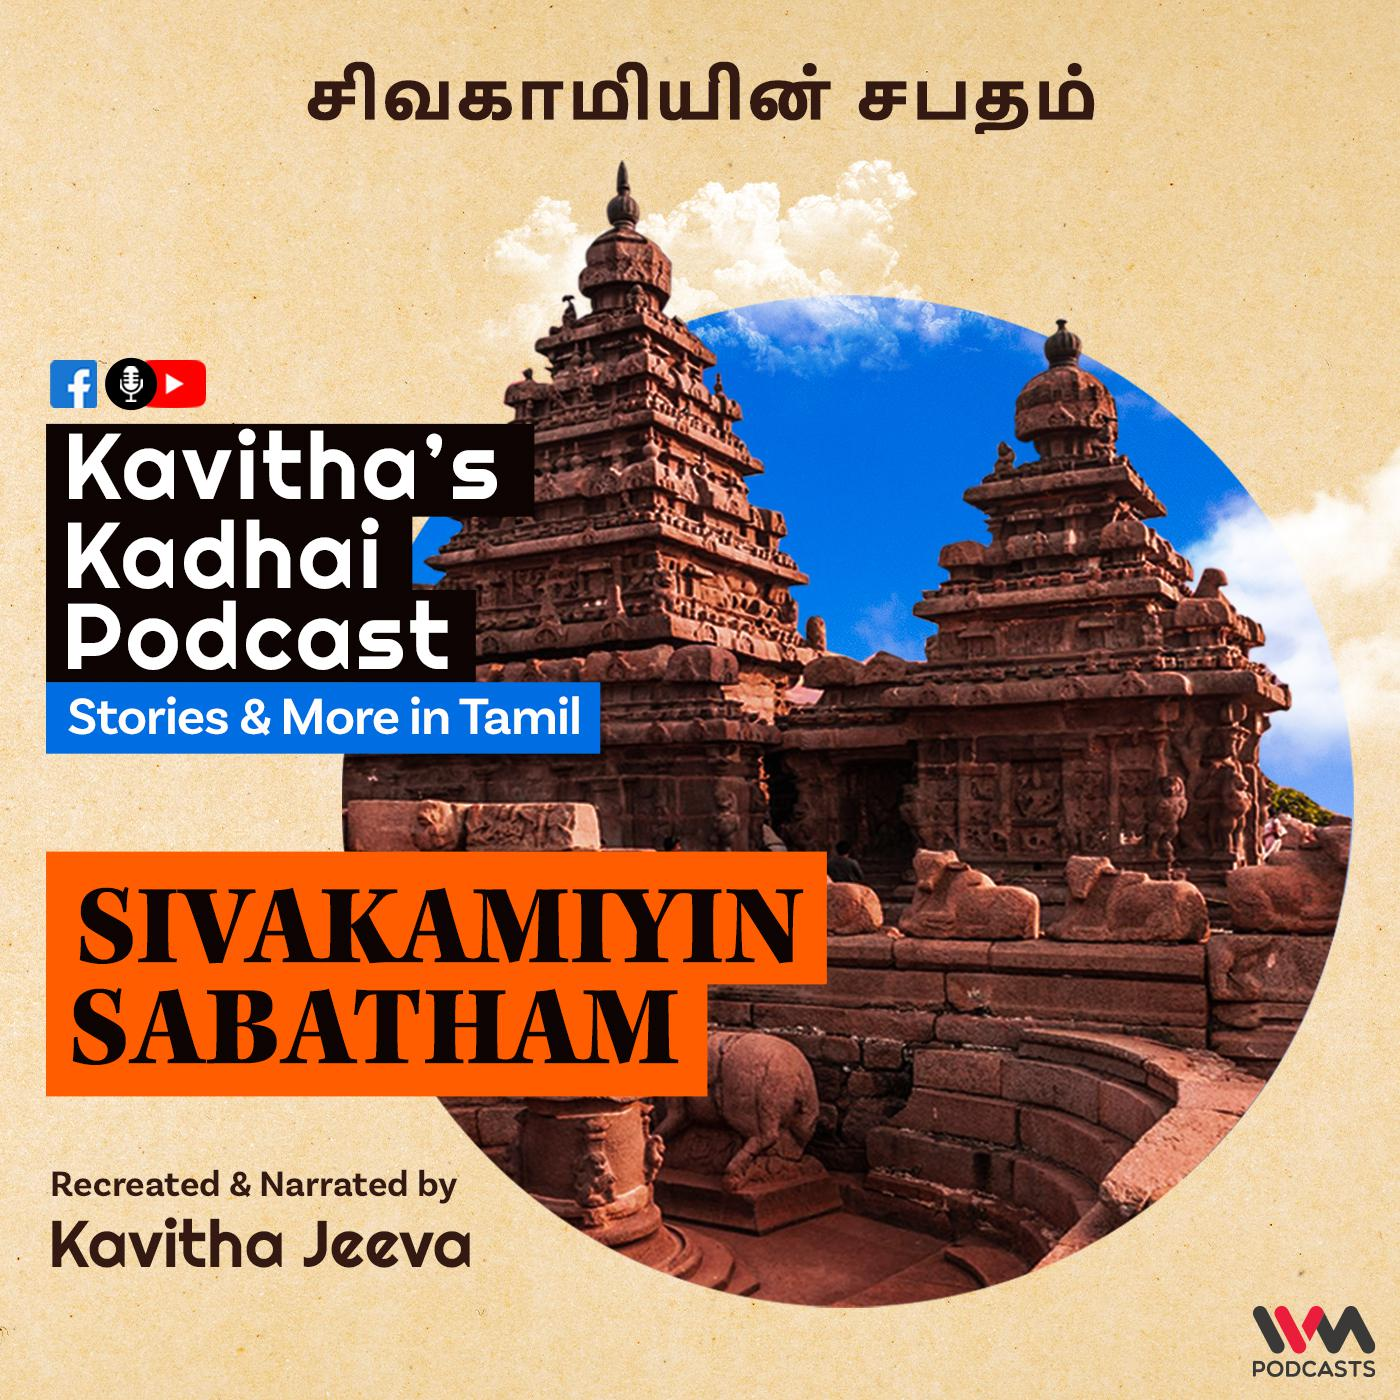 KadhaiPodcast's Sivakamiyin Sabatham with Kavitha Jeeva - Episode #102